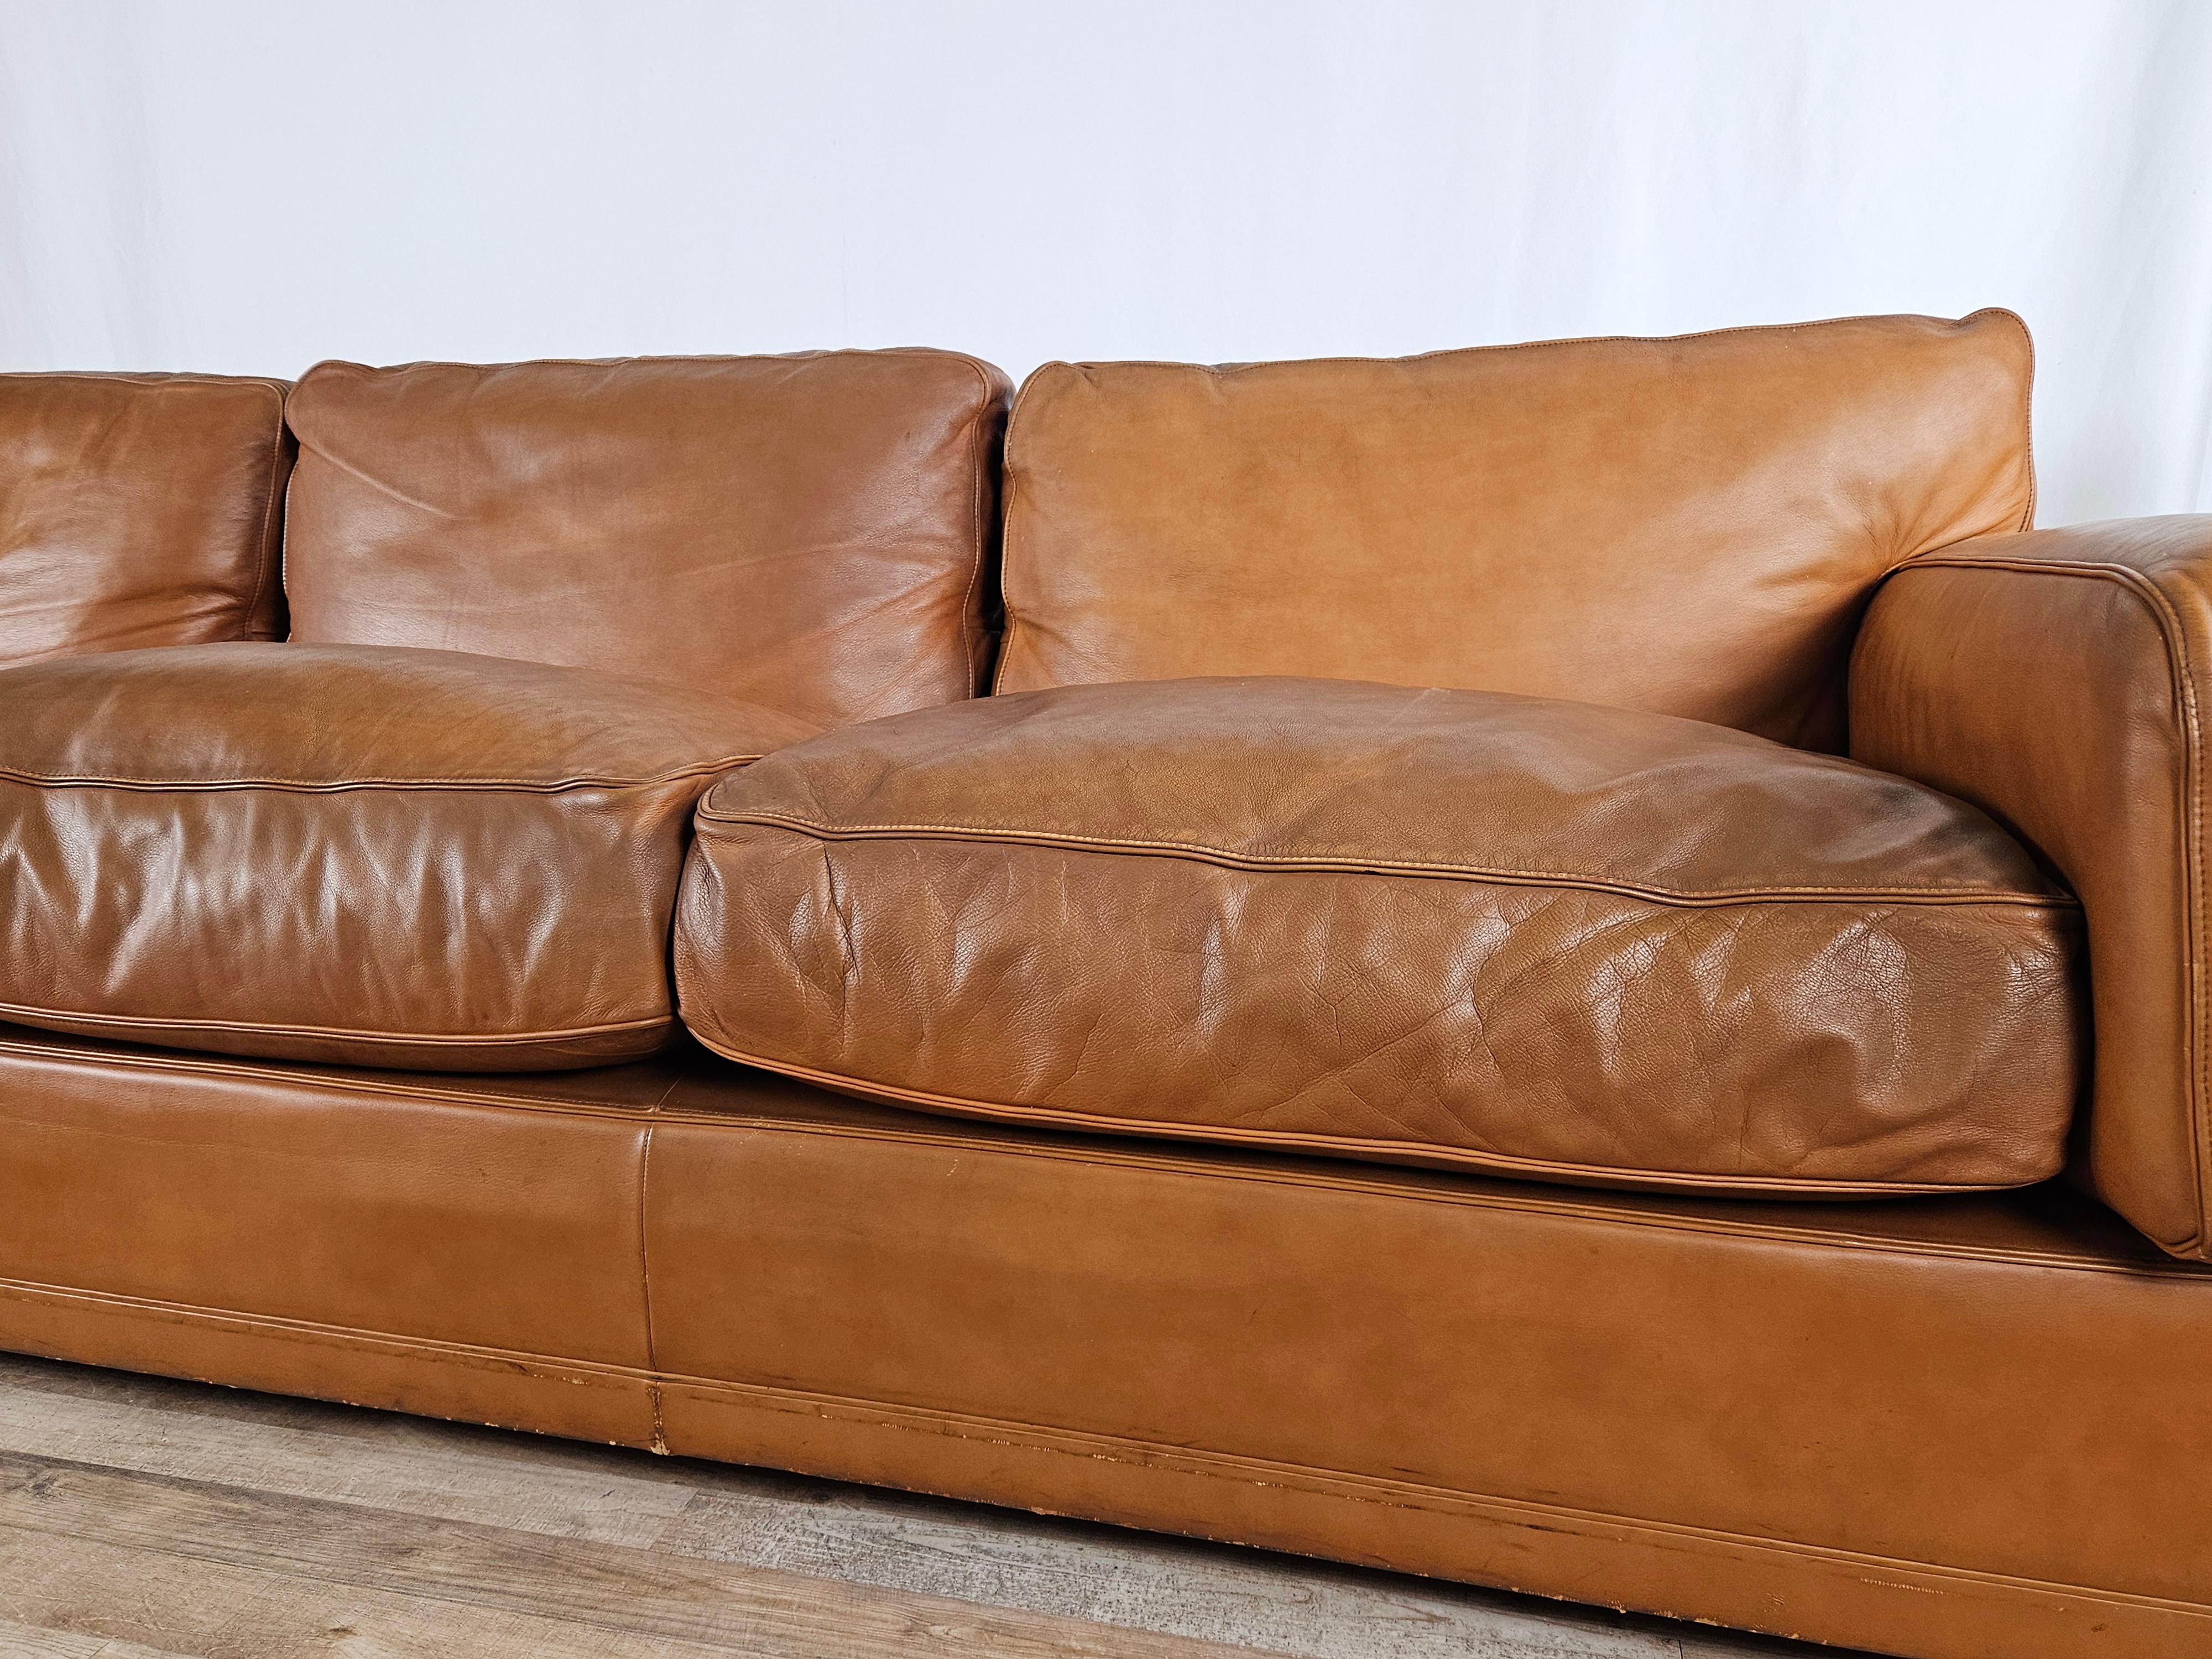 Italian Poltrona Frau three-seater 1970s sofa in cognac-colored leather For Sale